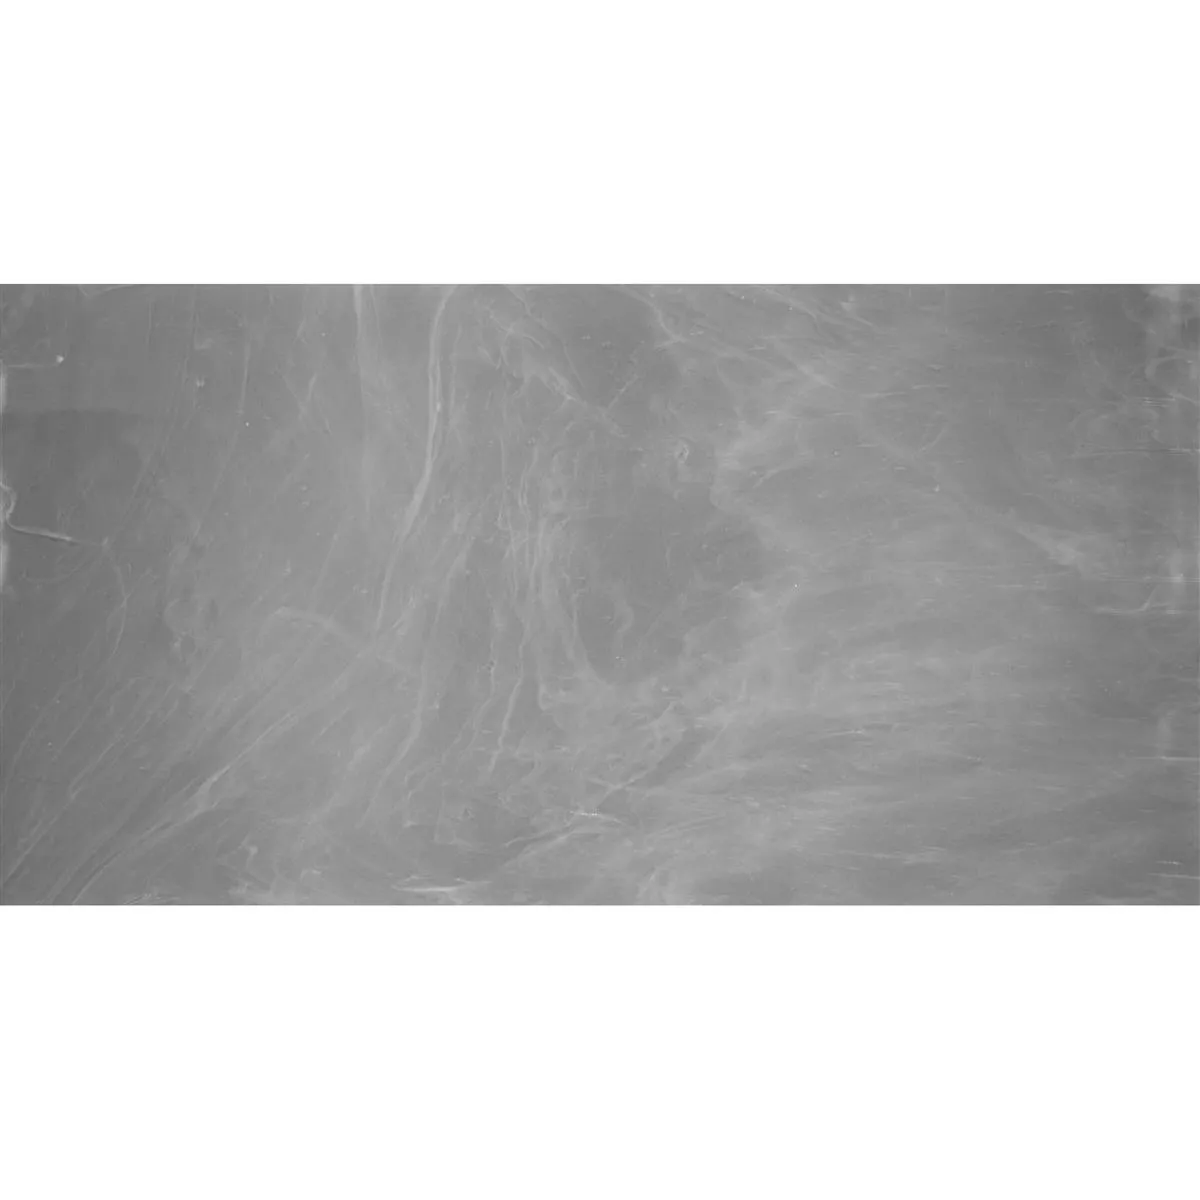 Staklo Zidne Pločice Trend-Vi Supreme Light Grey 30x60cm